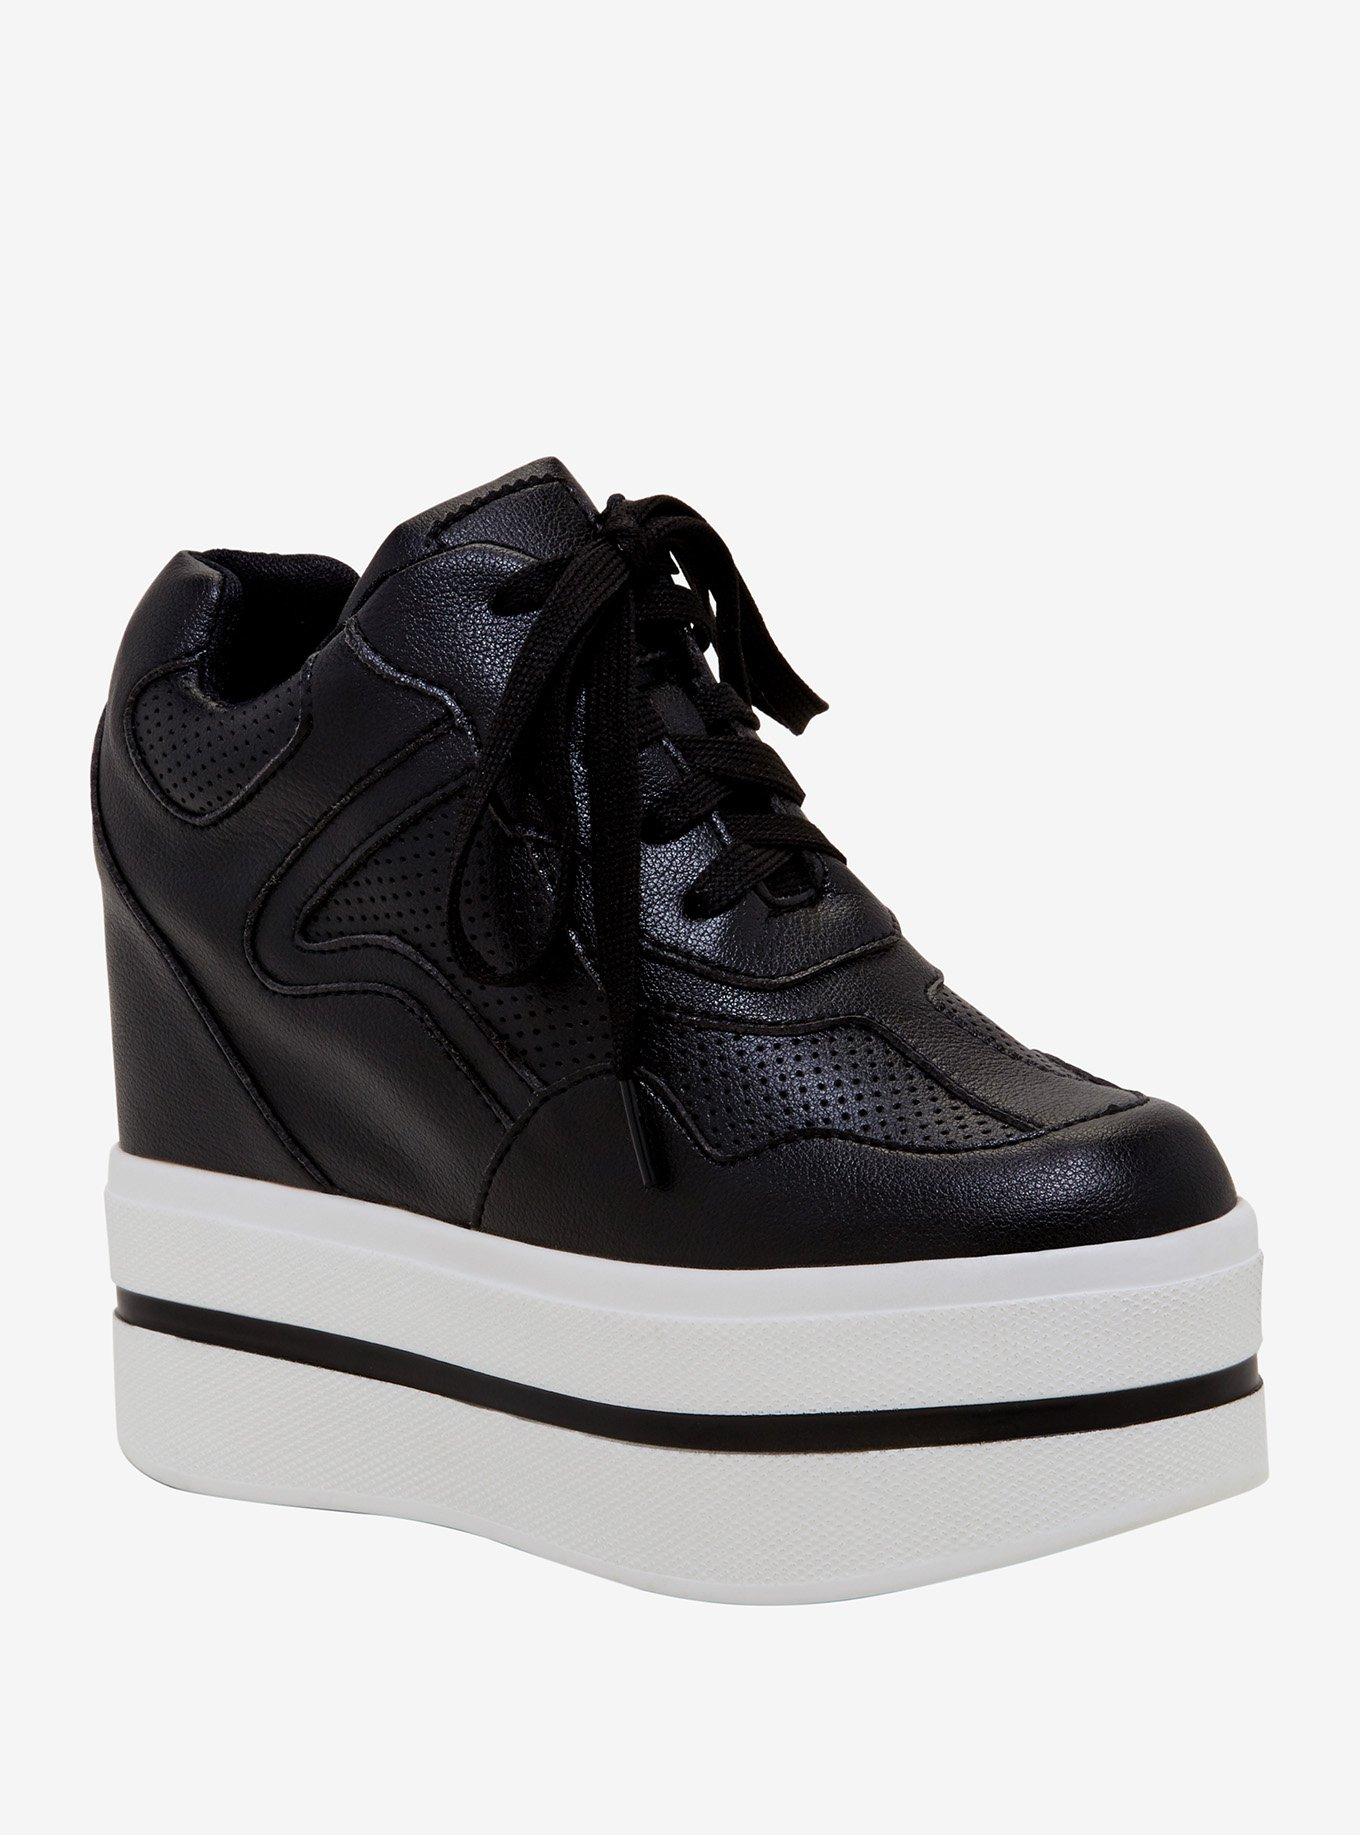 Black Platform Sneakers, MULTI, hi-res